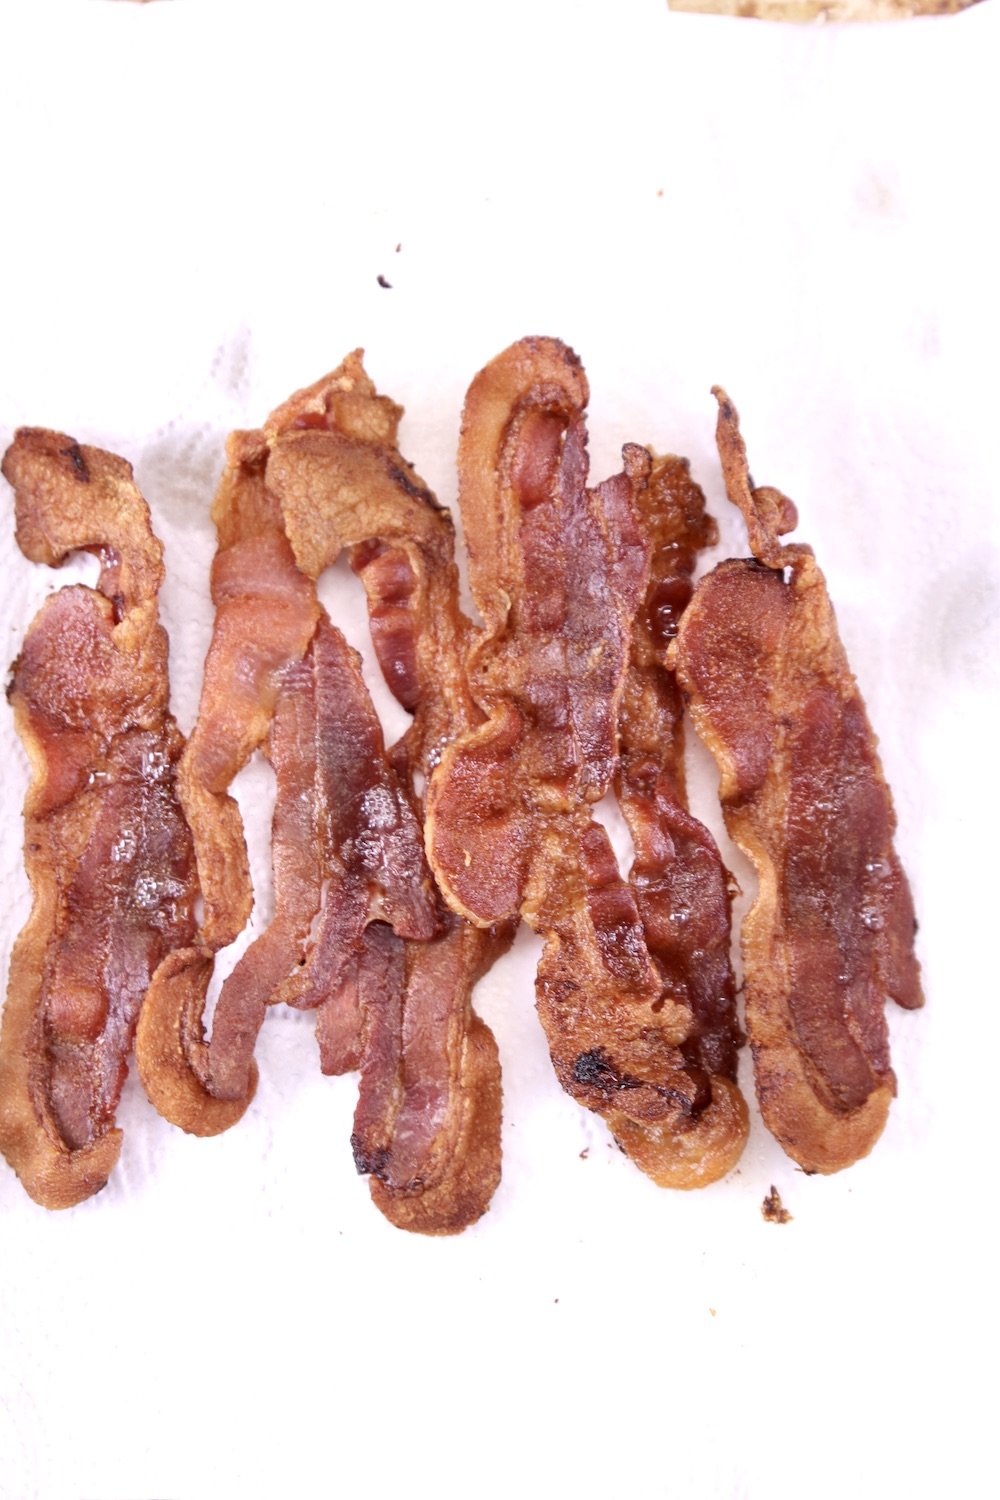 Bacon slices